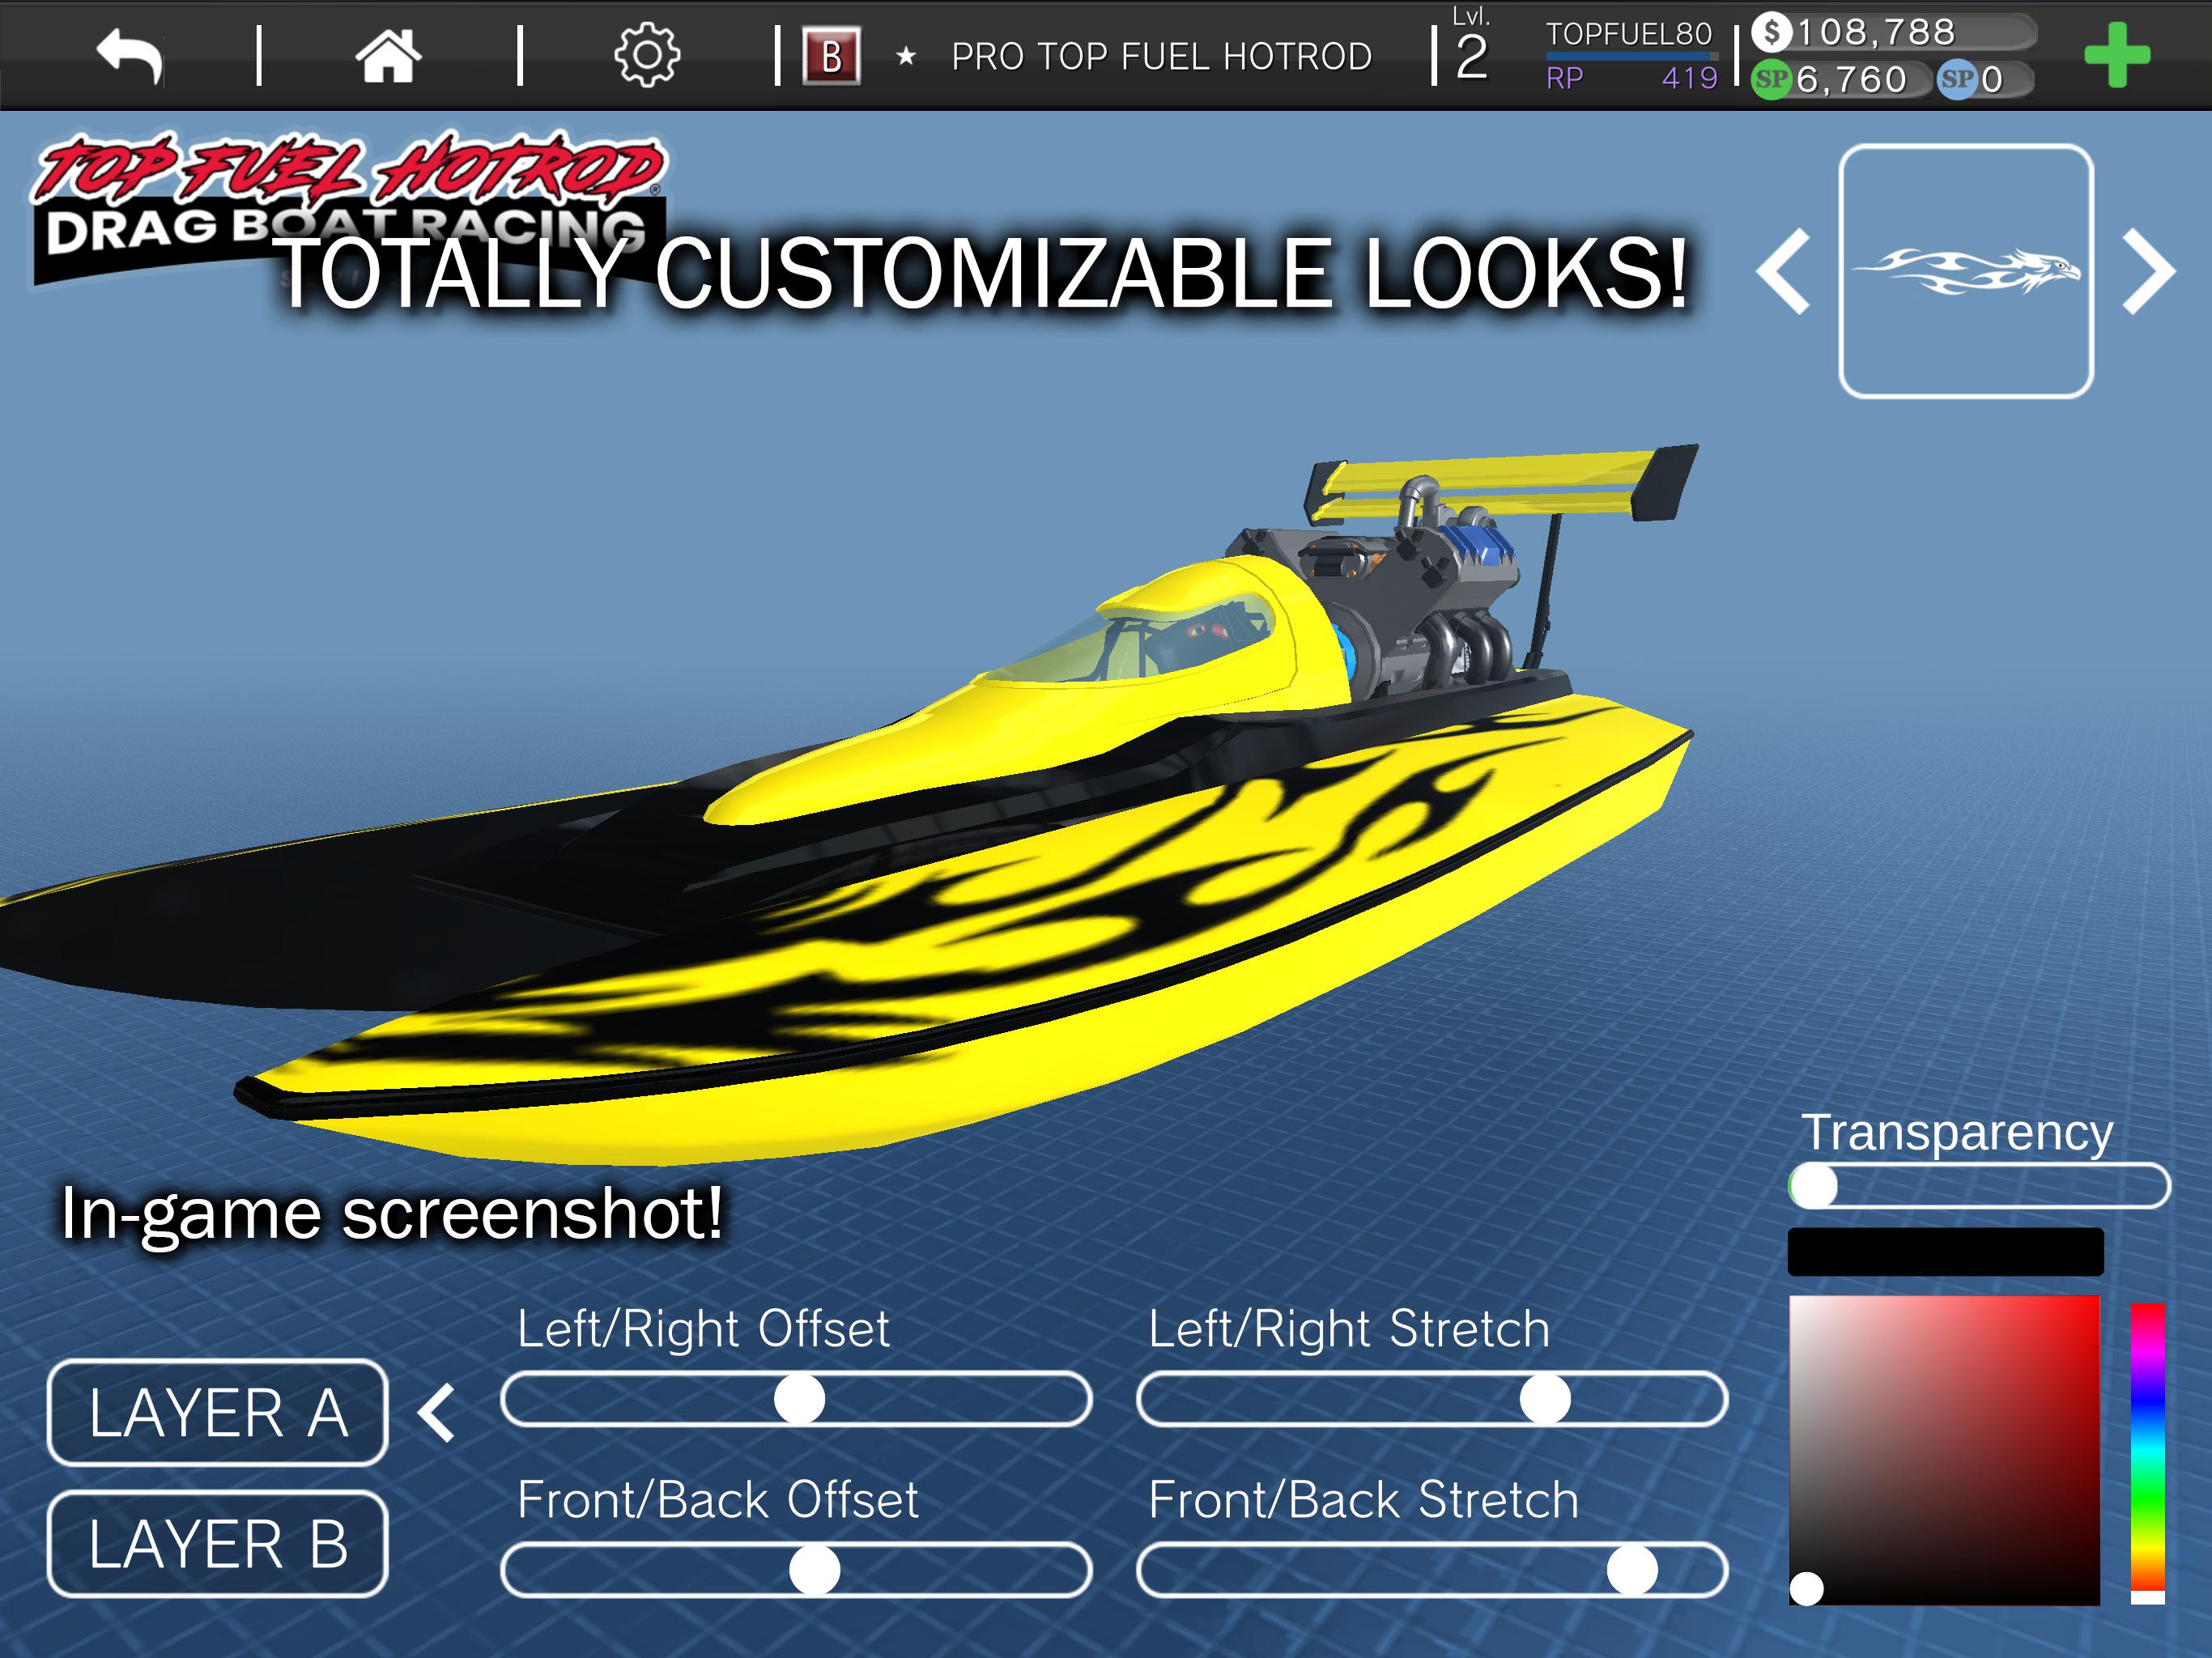 Top Fuel Hot Rod - Drag Boat Speed Racing Game 1.16 Screenshot 21